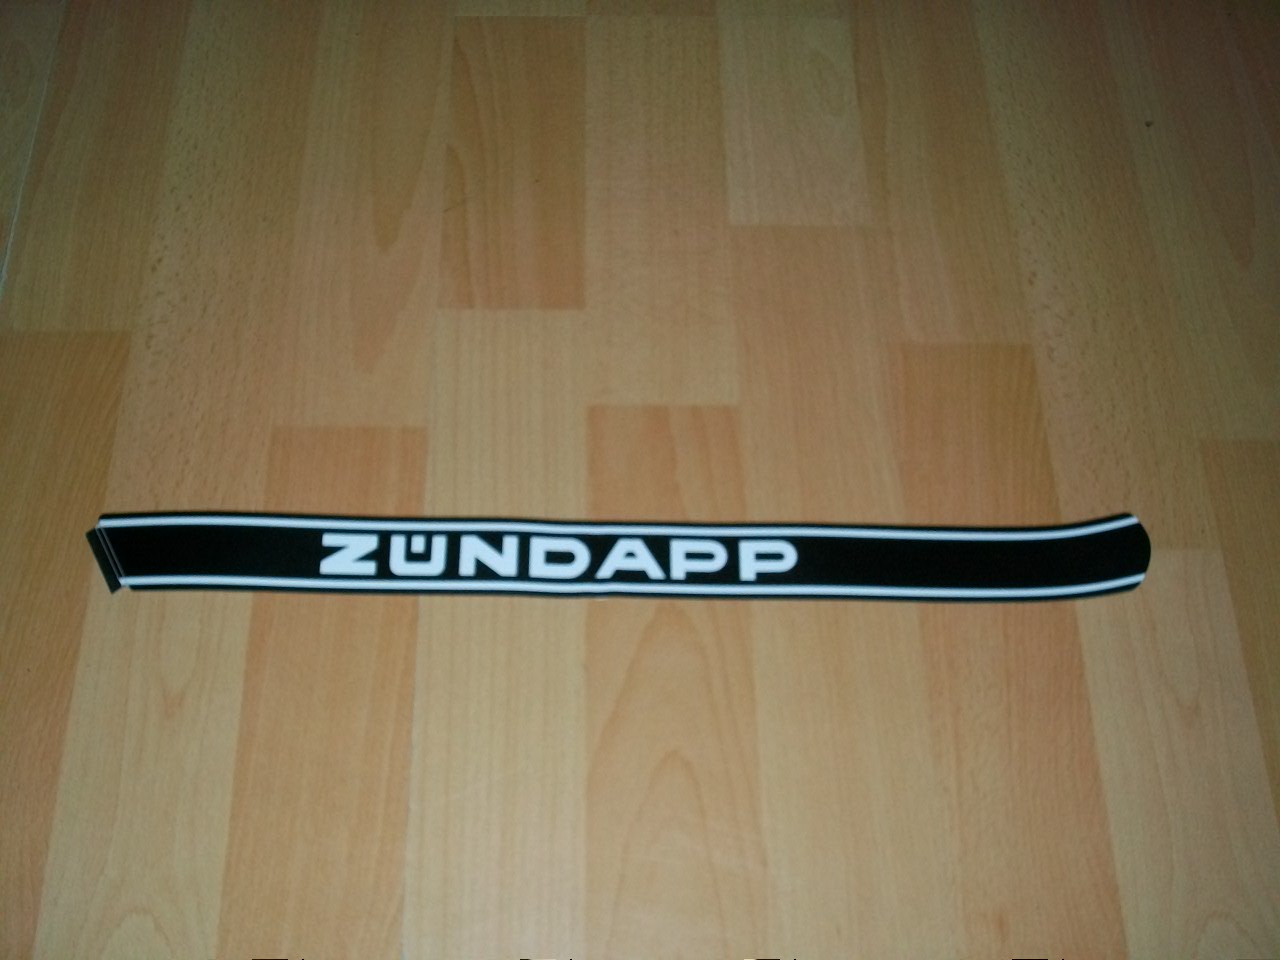 Sticker \" Zündapp \"